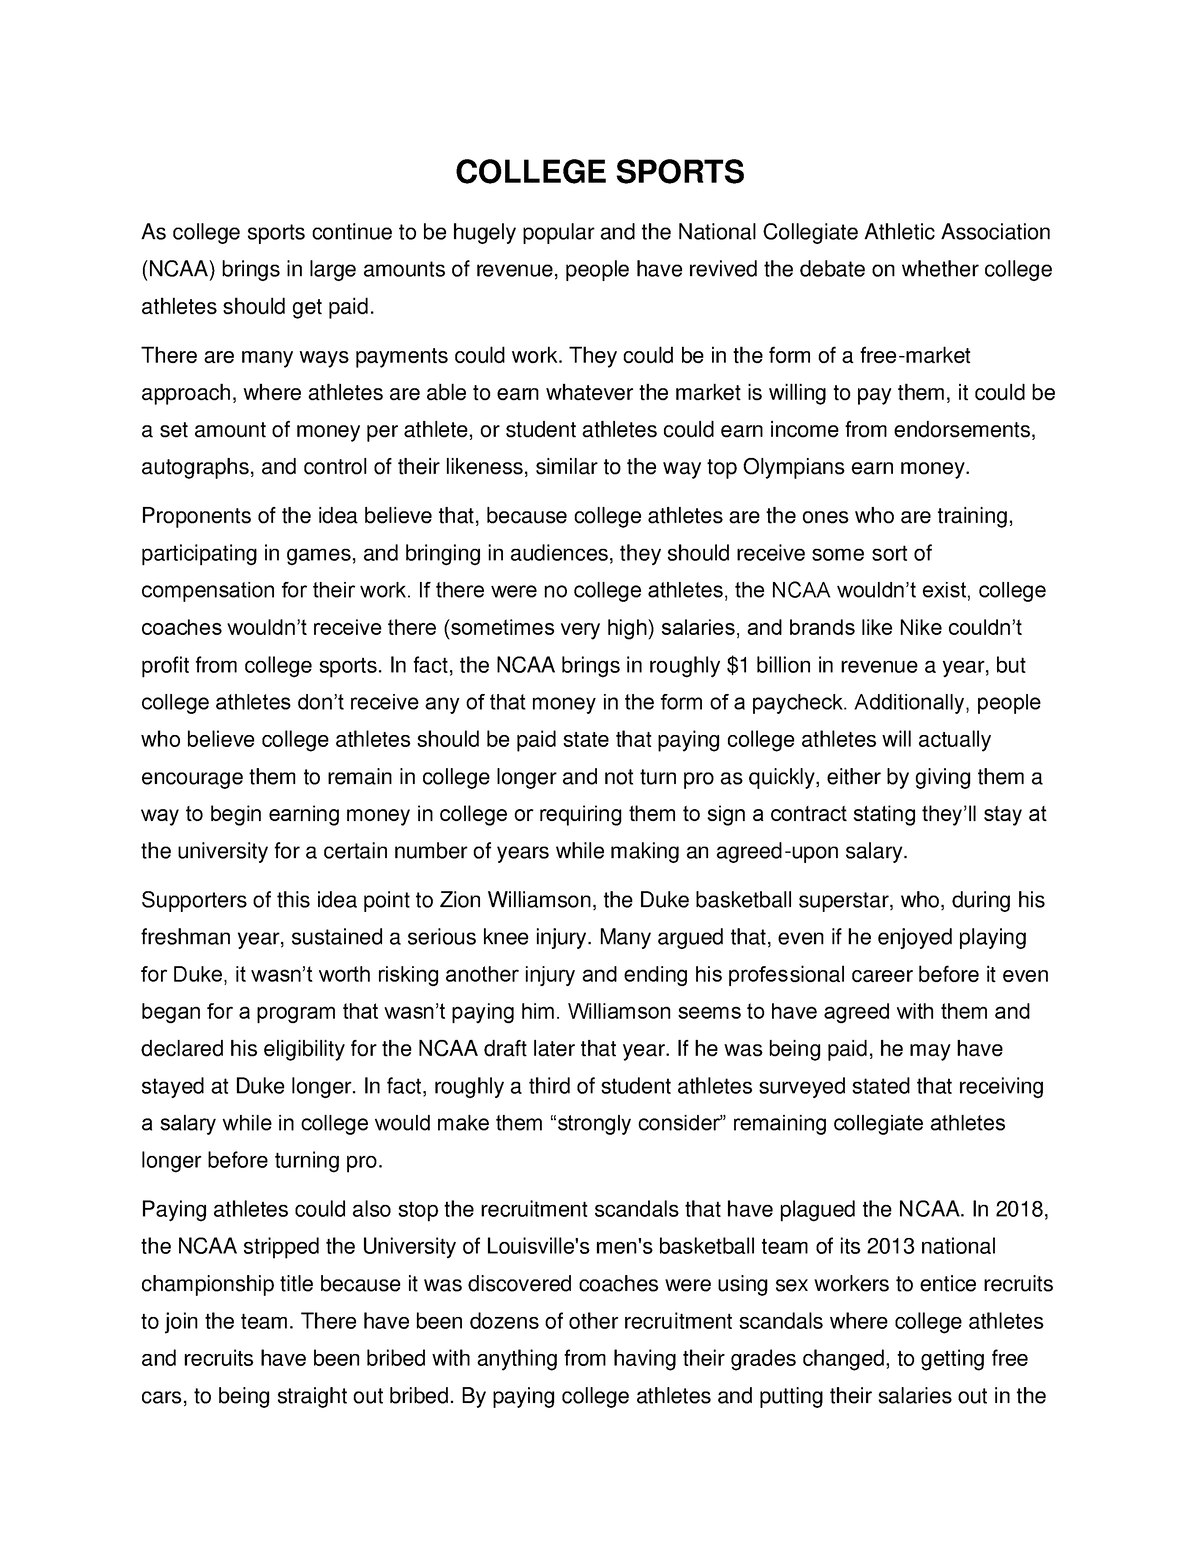 college sports argumentative essay topics